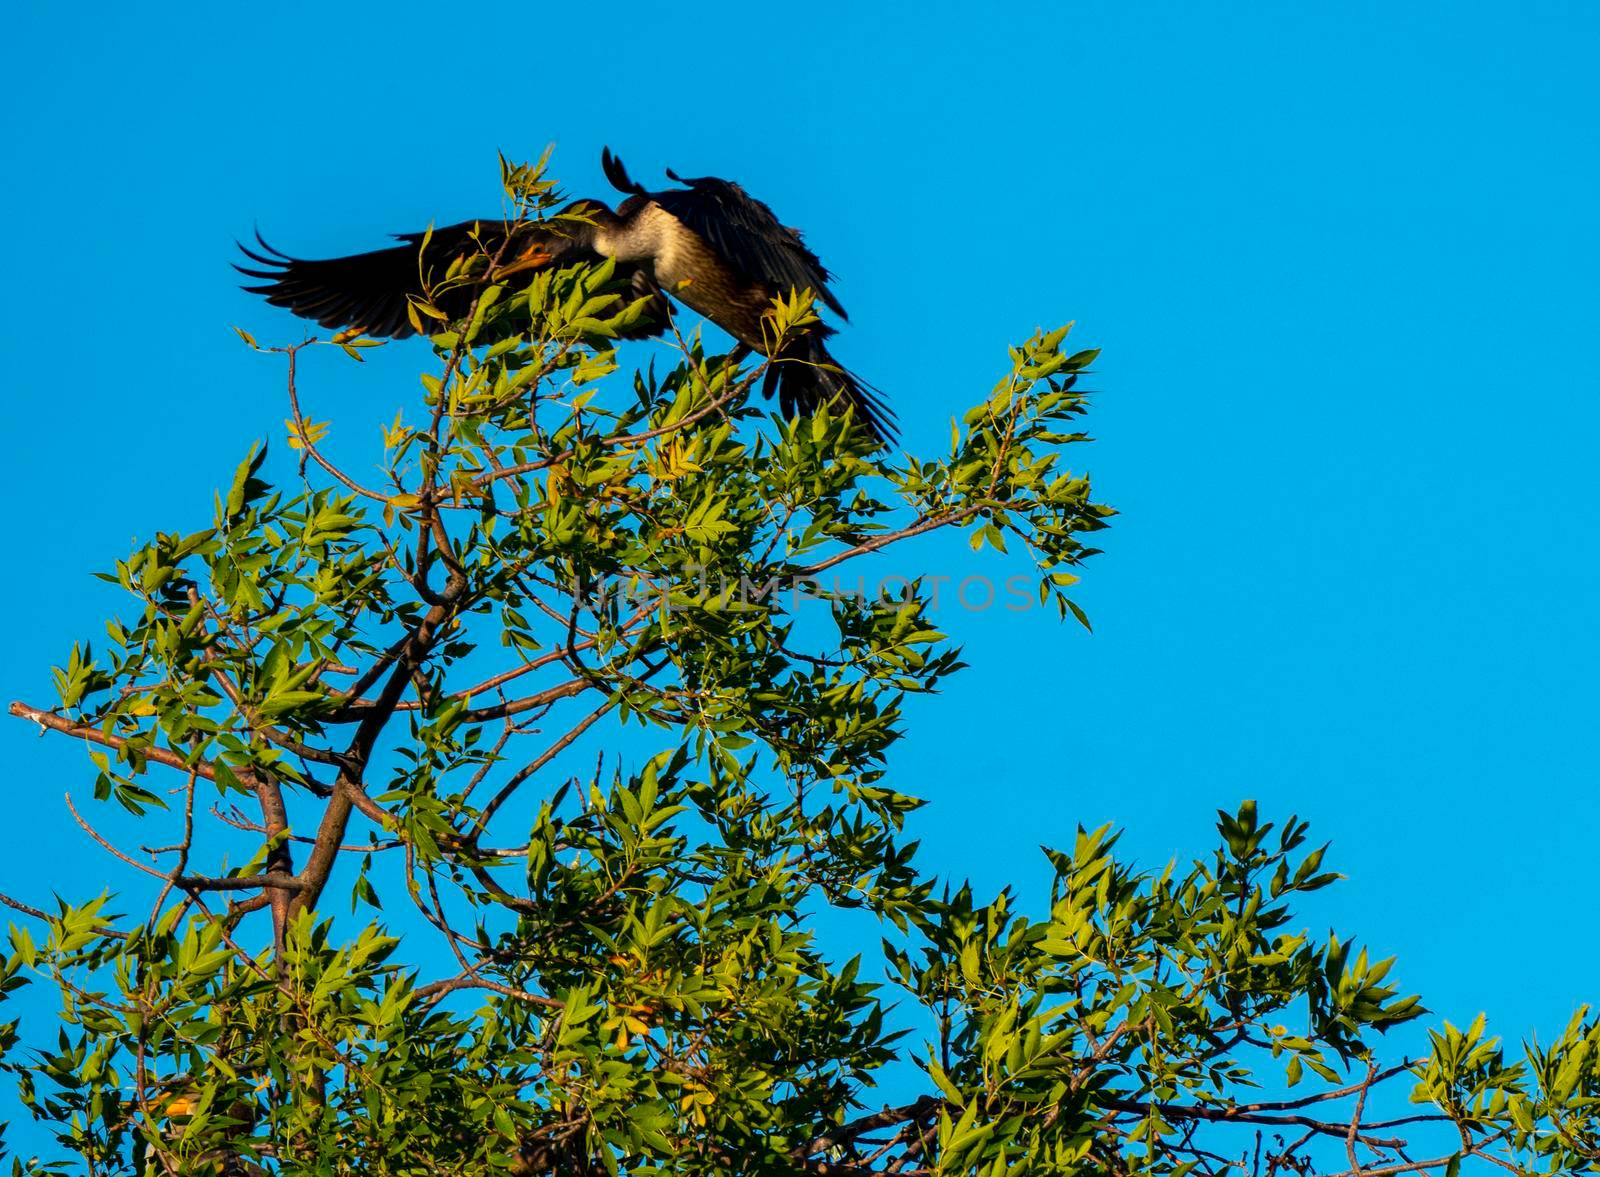 Cormorants in Tree by pictureguy